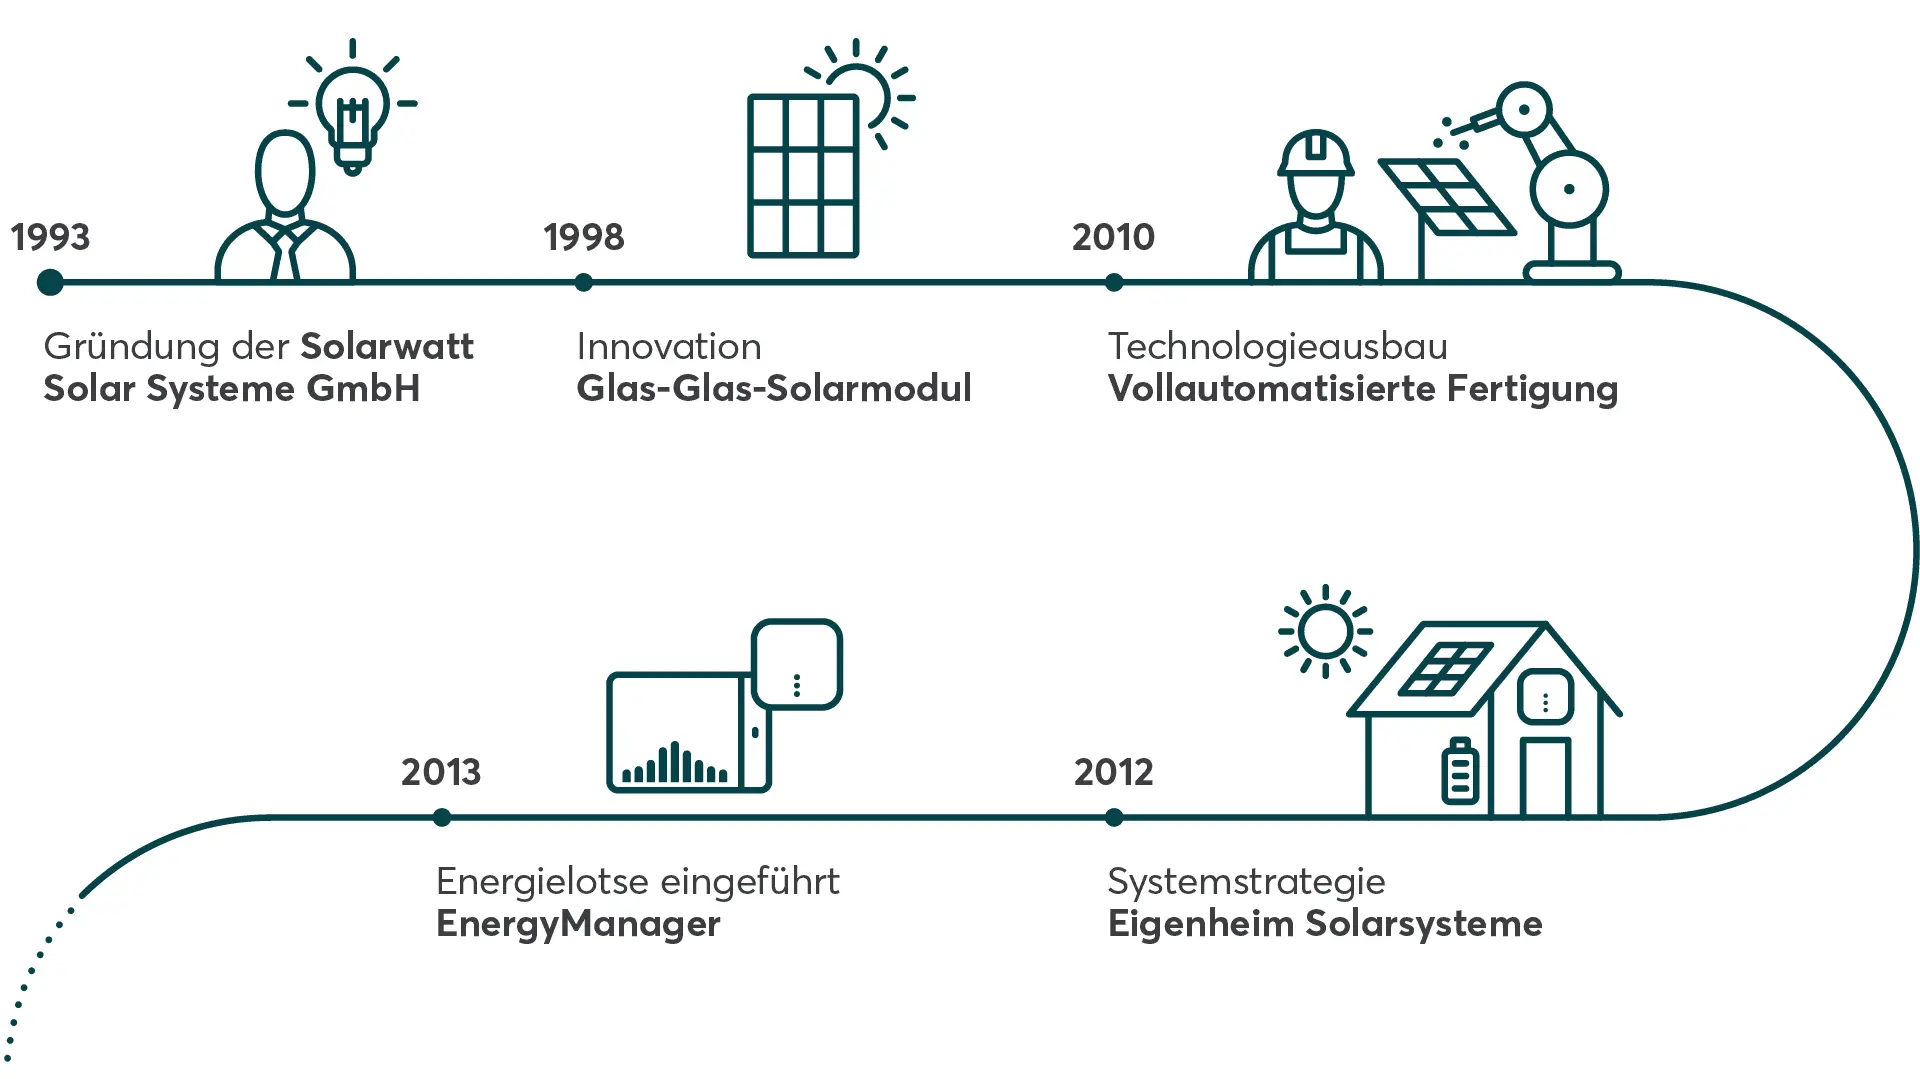 Firmengeschichte Solarwatt 1993 bis 2013